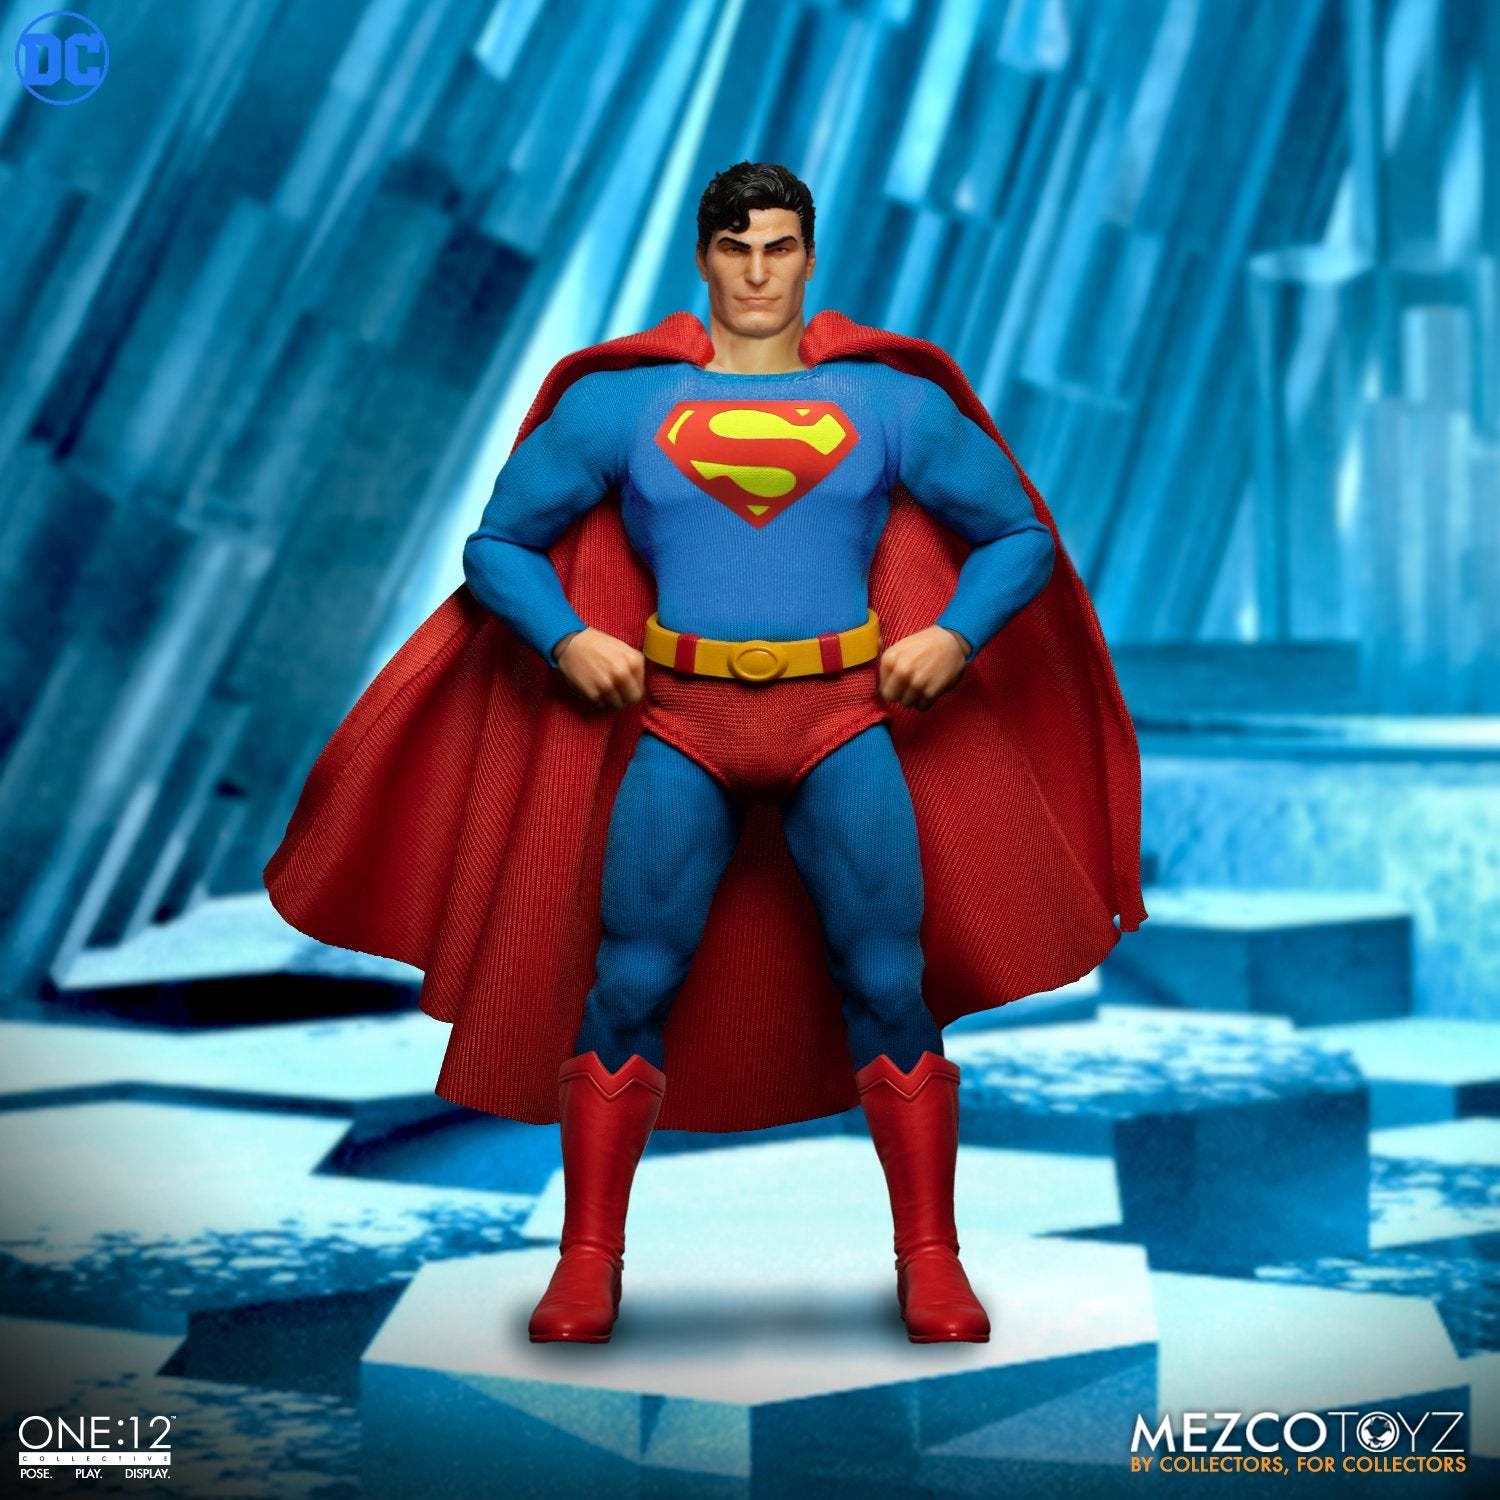 Superman Man of Steel Edition By Mezco